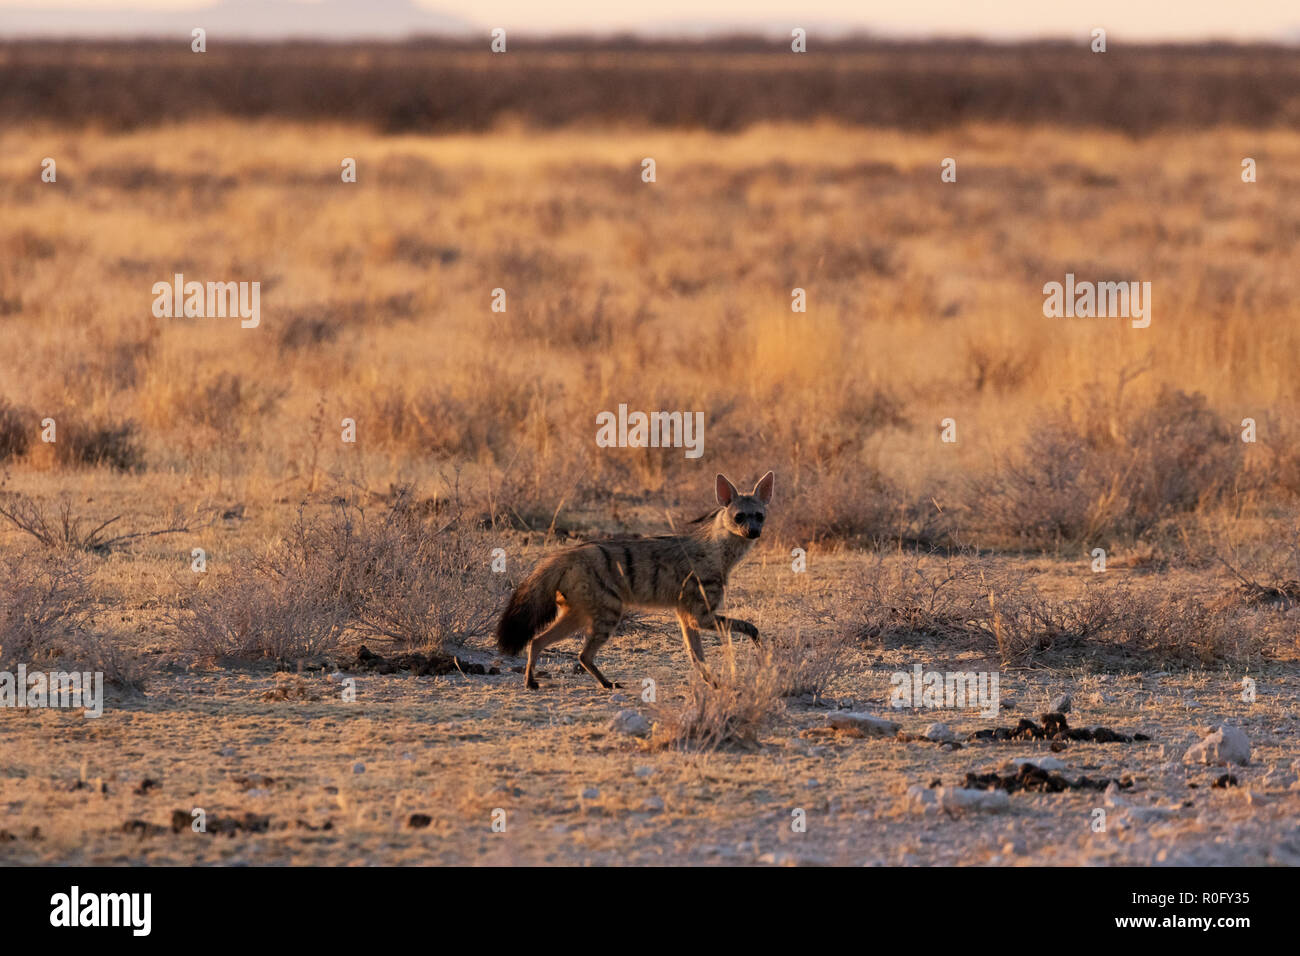 Aardwolf, Proteles cristata, Etosha National Park, Namibia Africa Stock Photo